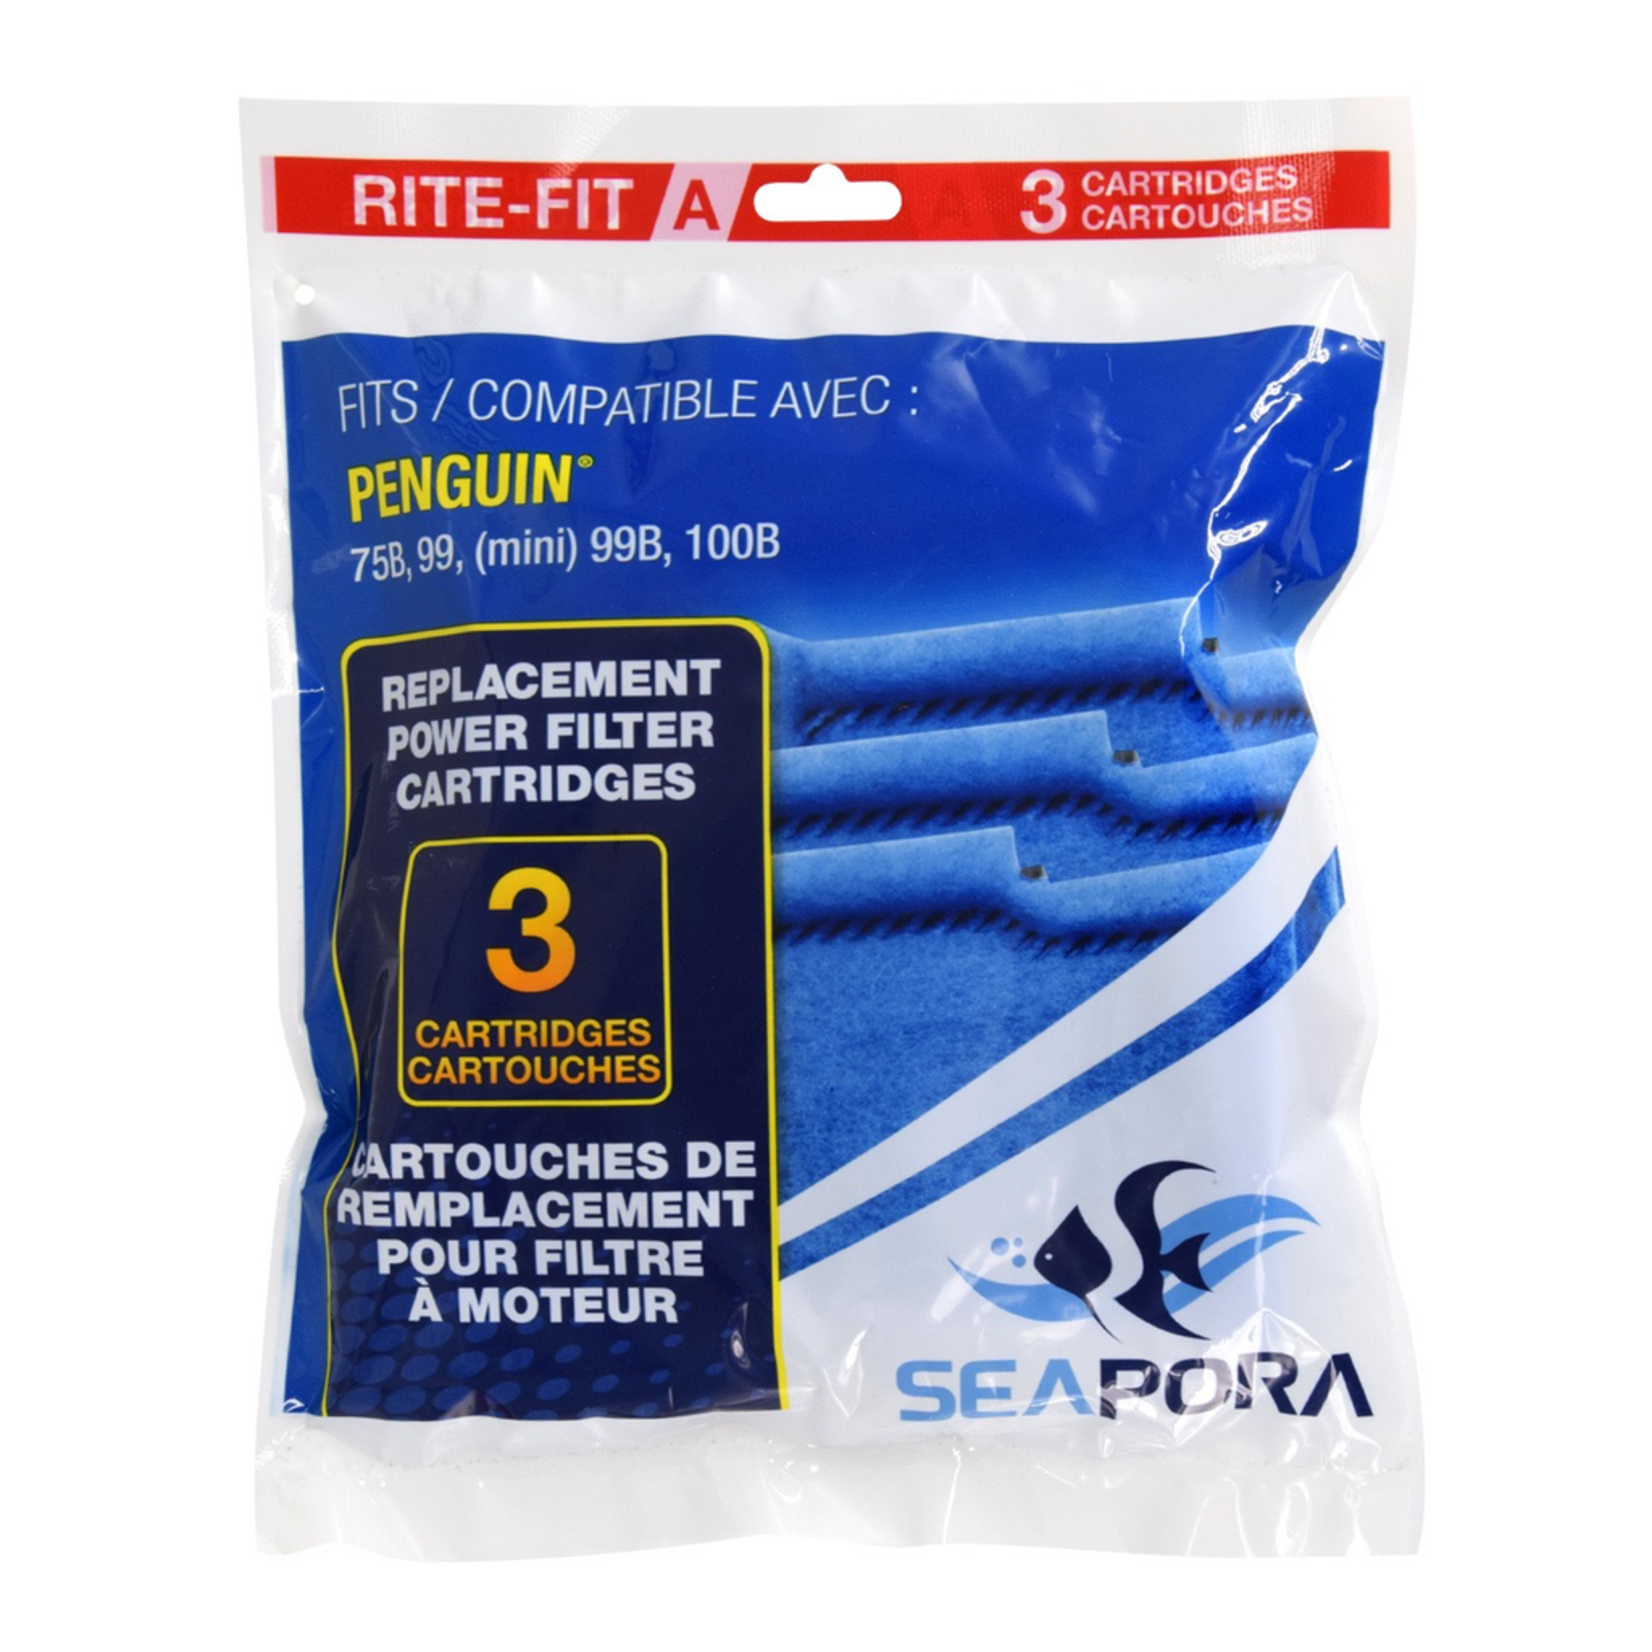 SEAPORA Rite-Fit A Cartridges for Penguin® Power Filters - 75B/99 (Mini)/99B/100B - 3 pk